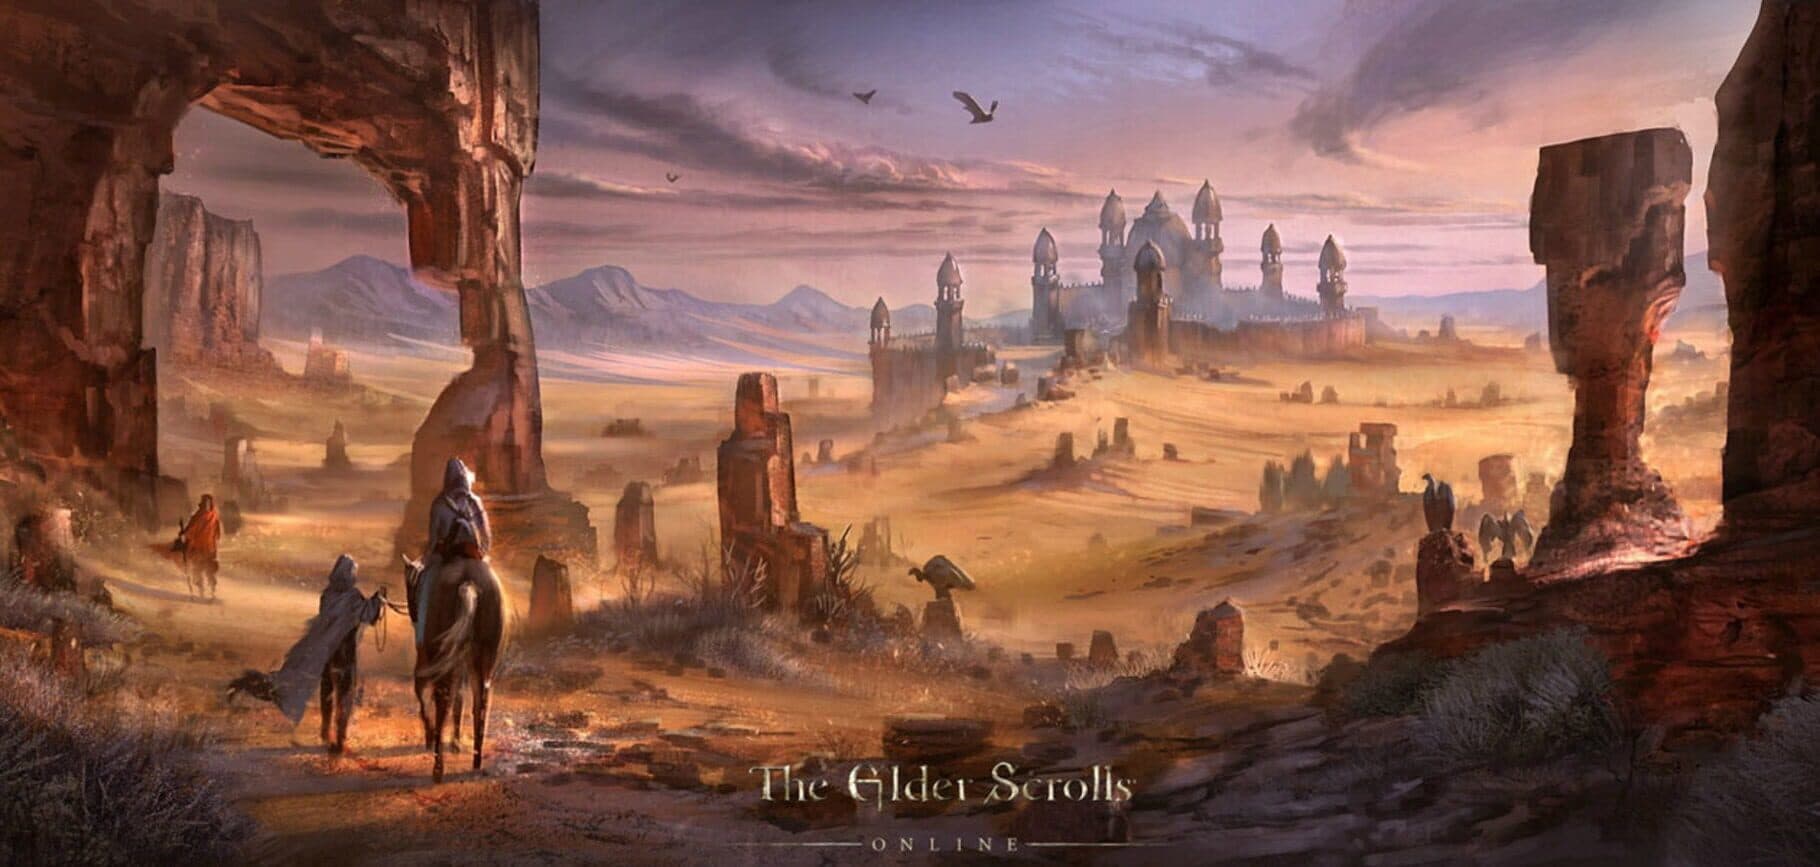 The Elder Scrolls Online Image